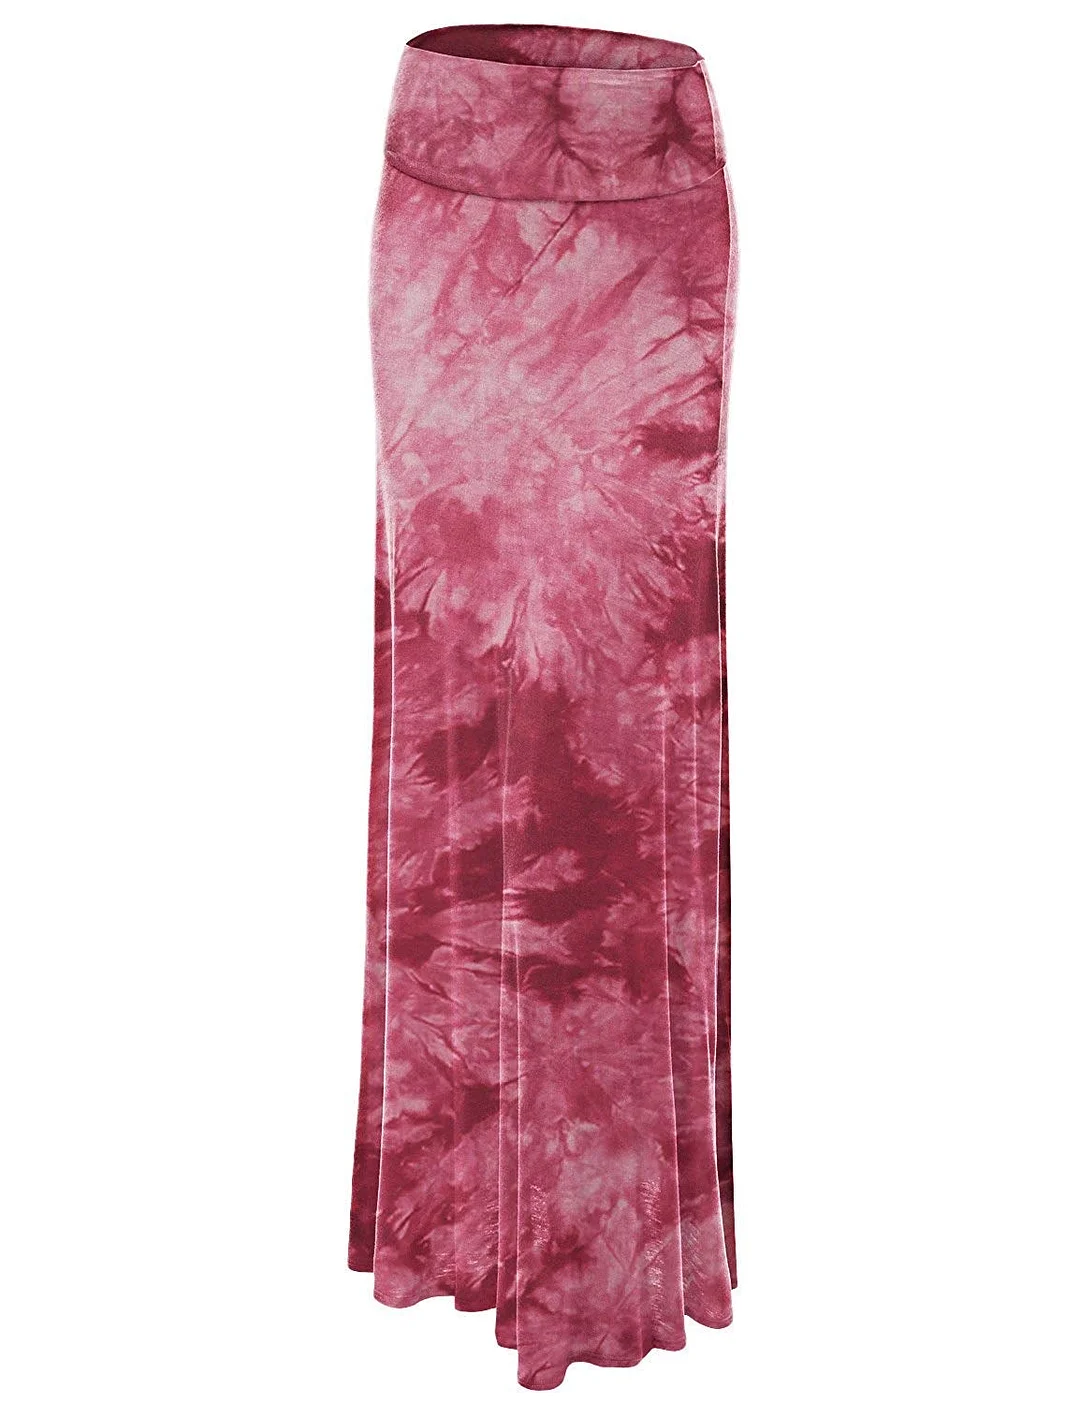 Women's Maxi Skirt Basic Solid Tie Dye Foldable High Waist Floor Length Maxi Skirt S-3XL Plus Size